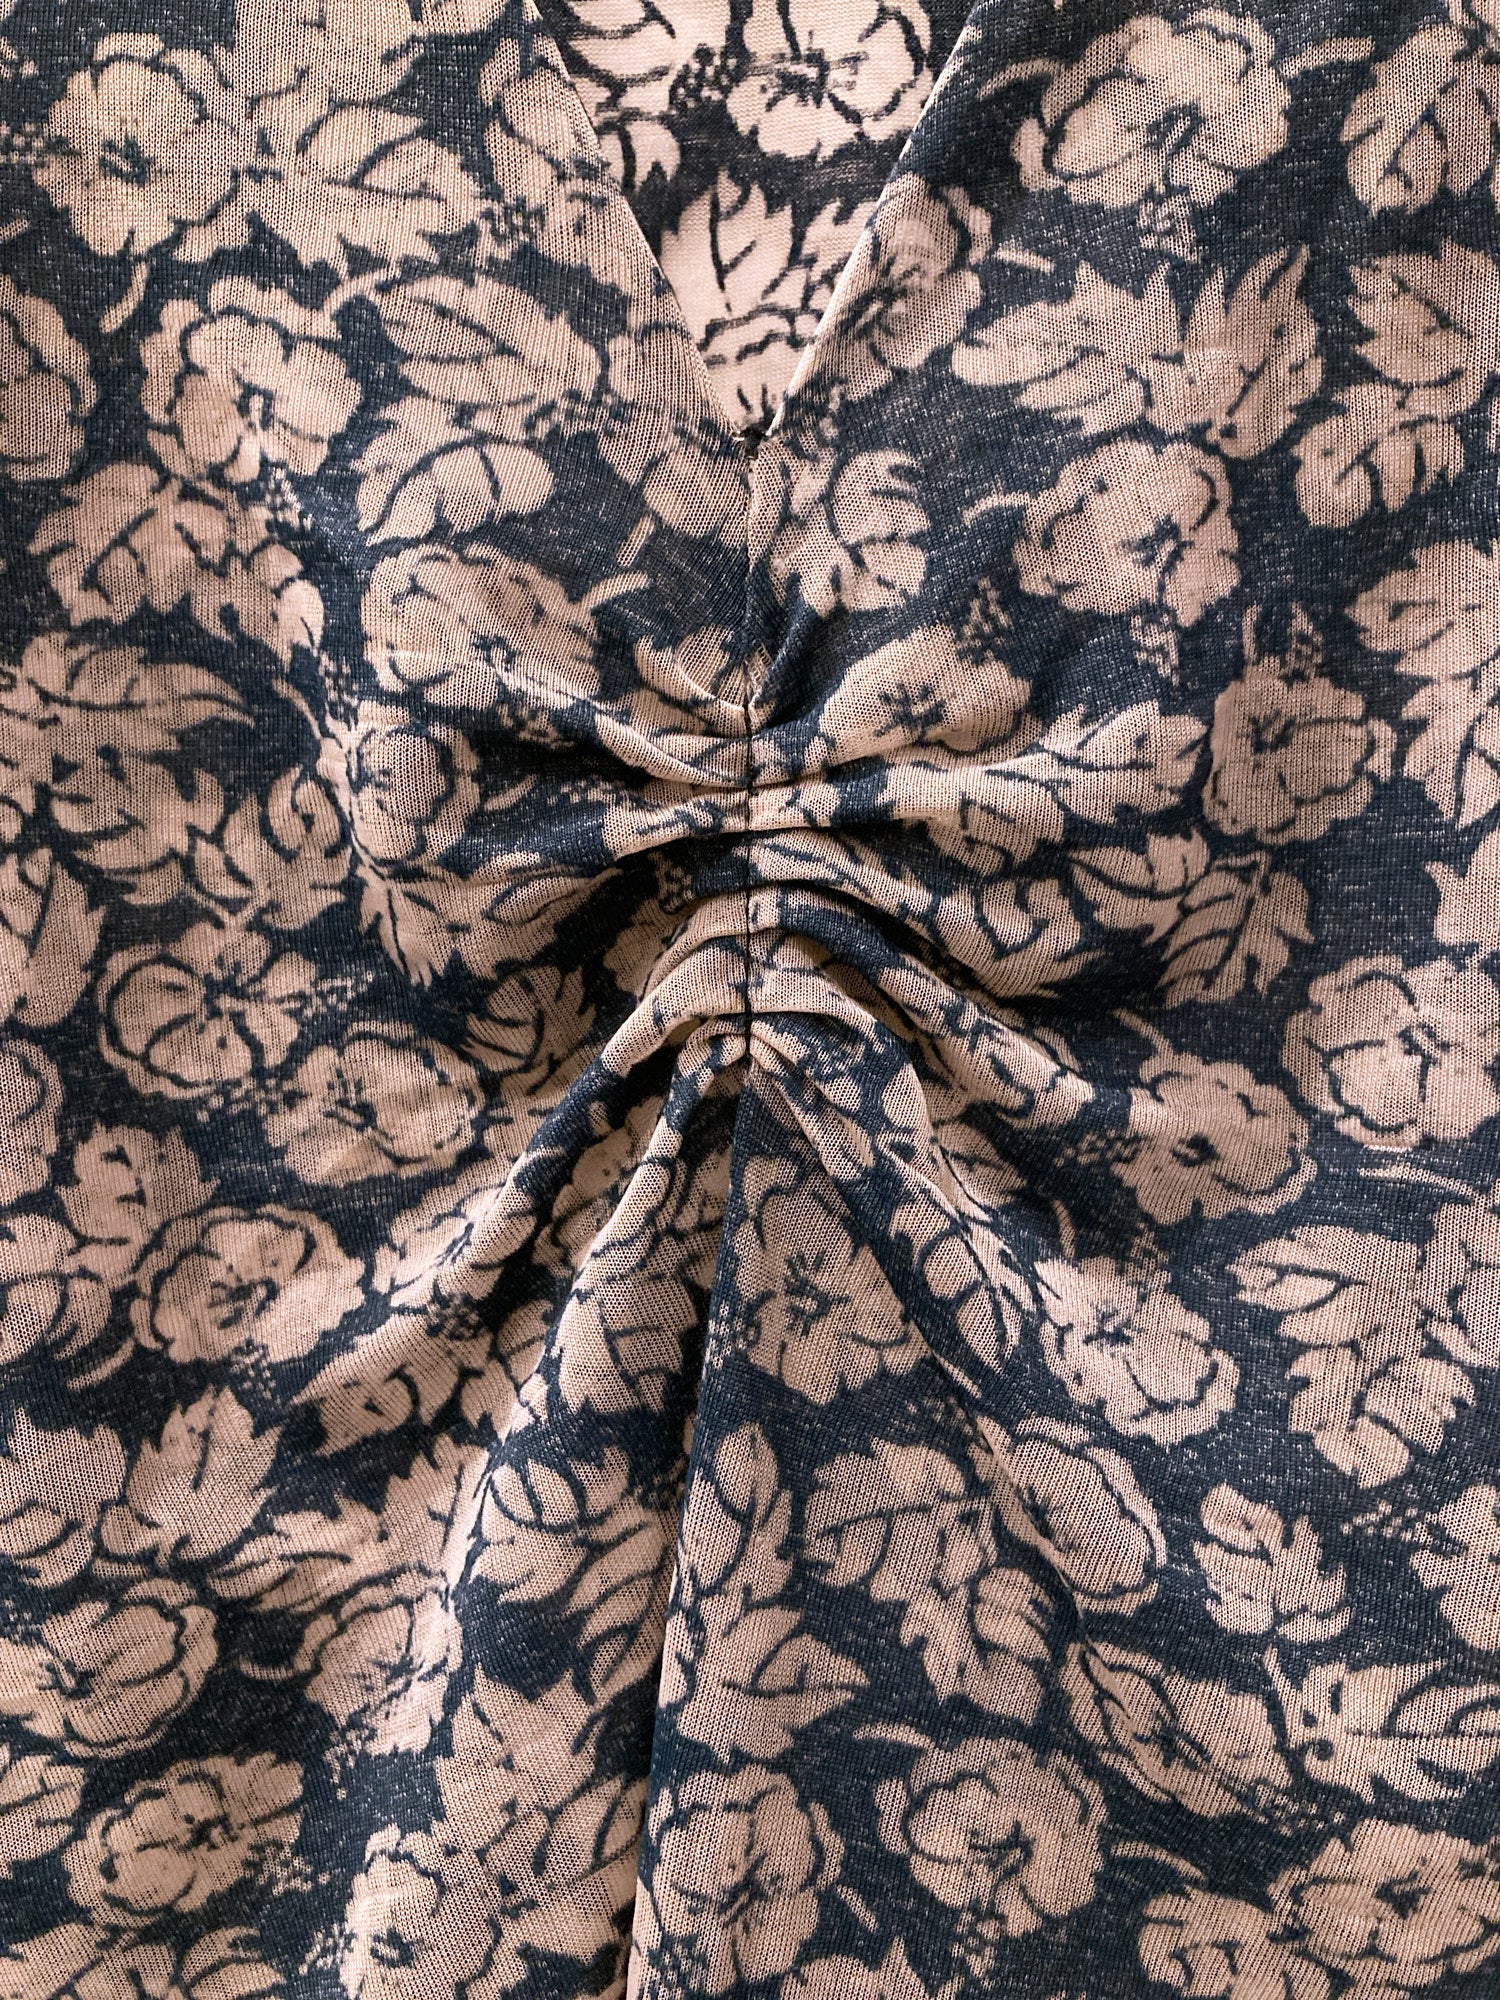 Jean Colonna sheer mushroomy brown floral print jersey v neck sleeveless dress